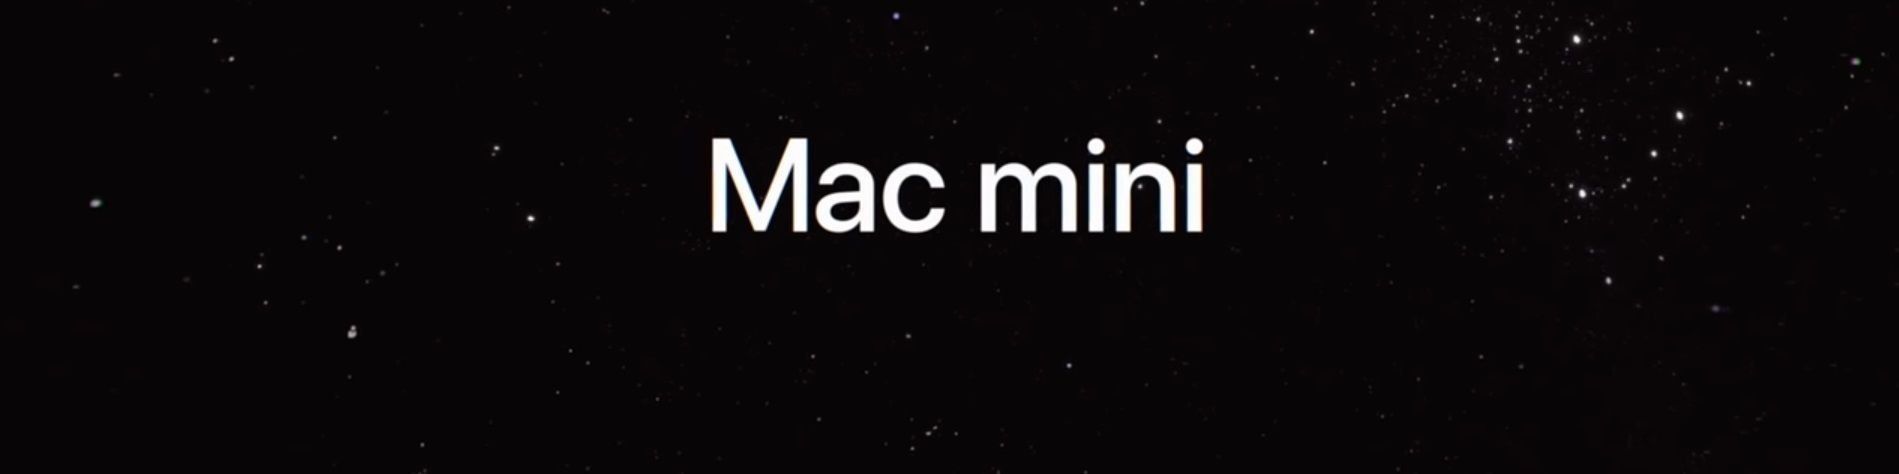 Apple Mac mini 2018 - pros and cons